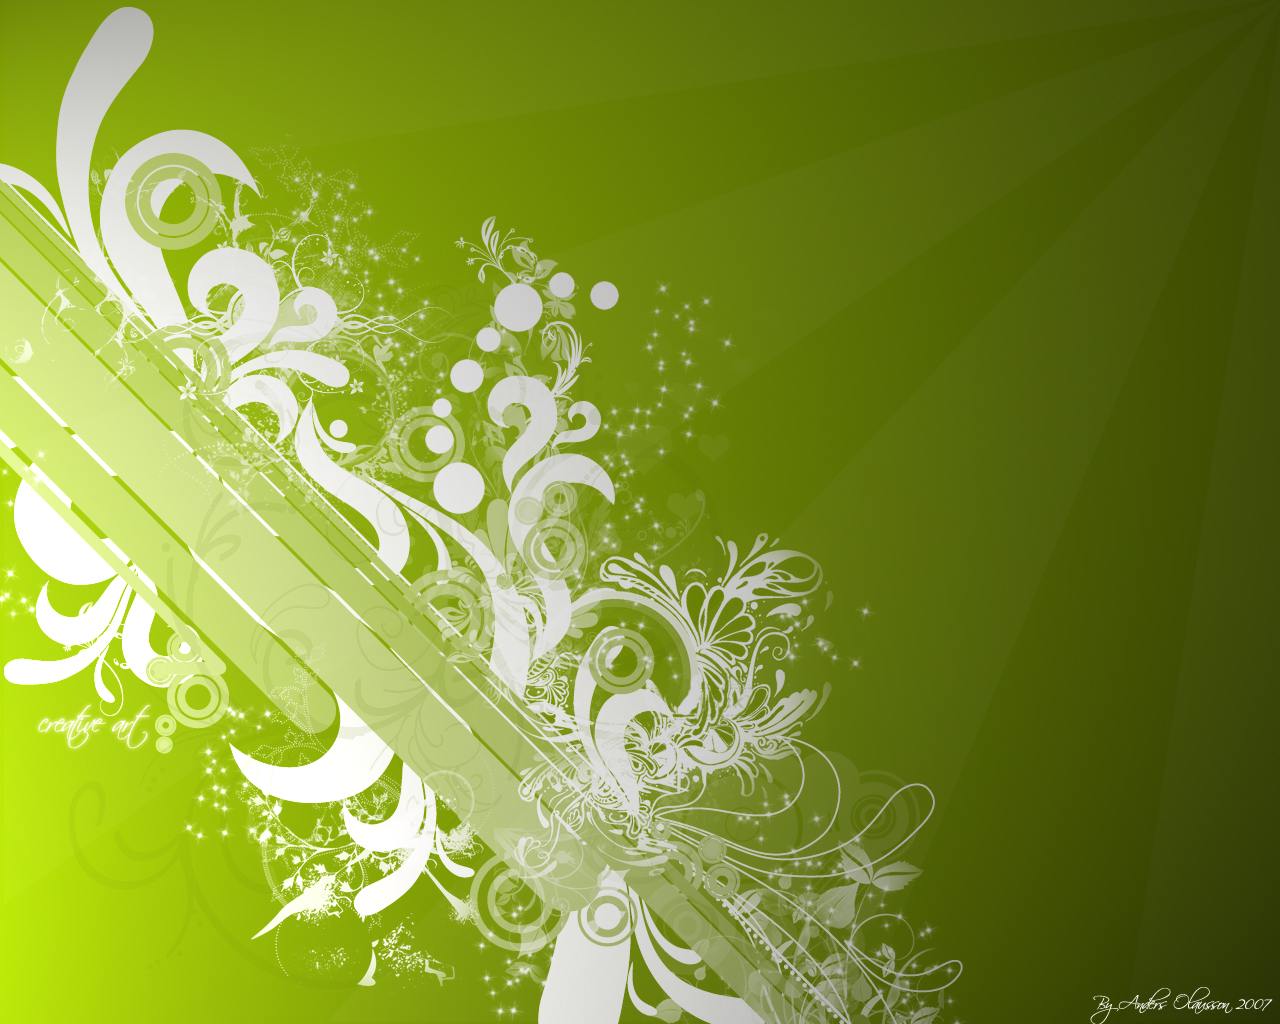 Artist Green Desktop Wallpaper Picture Background